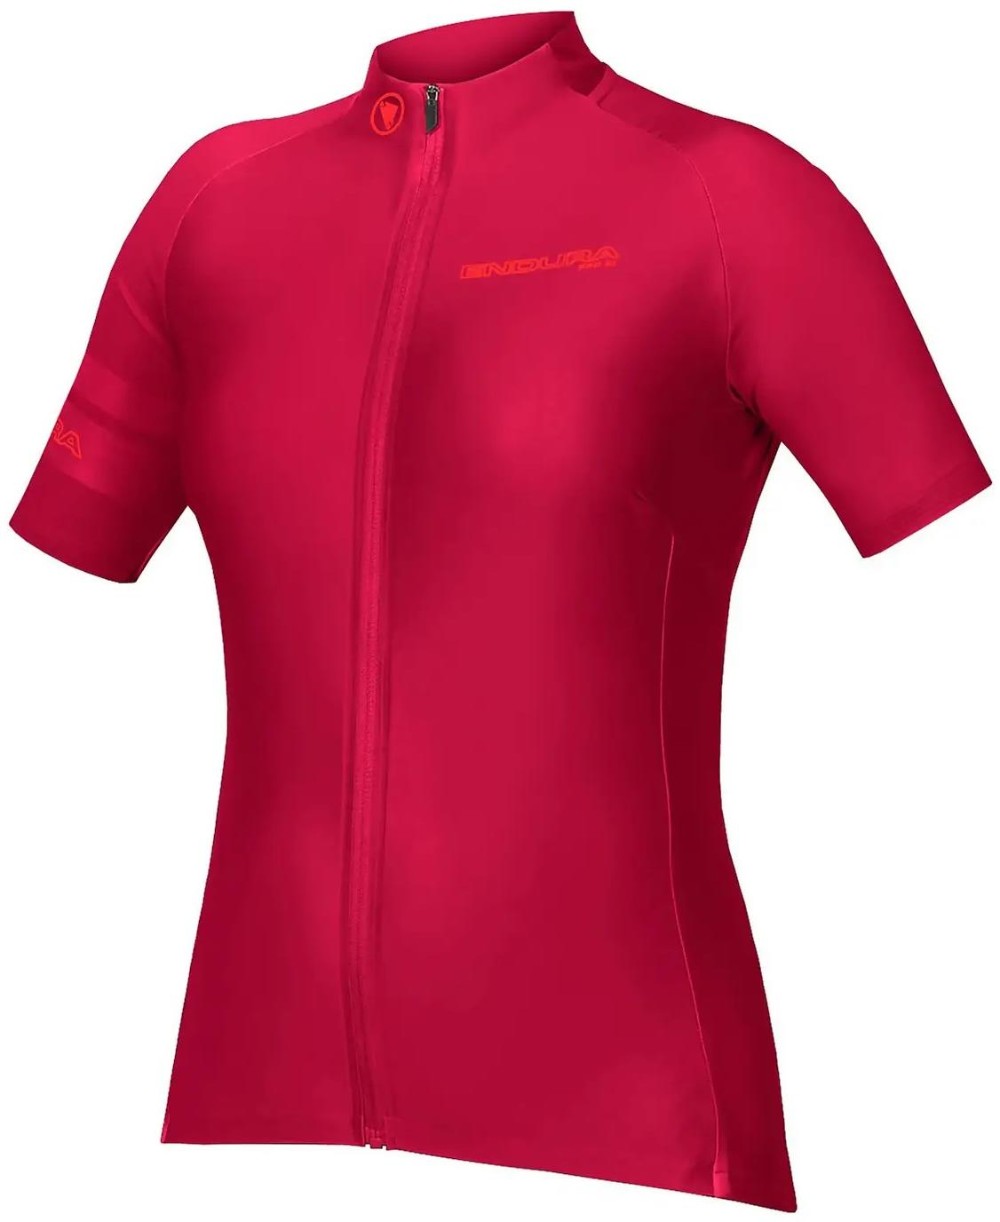 Pro SL Womens Short Sleeve Cycling Jersey II image 0